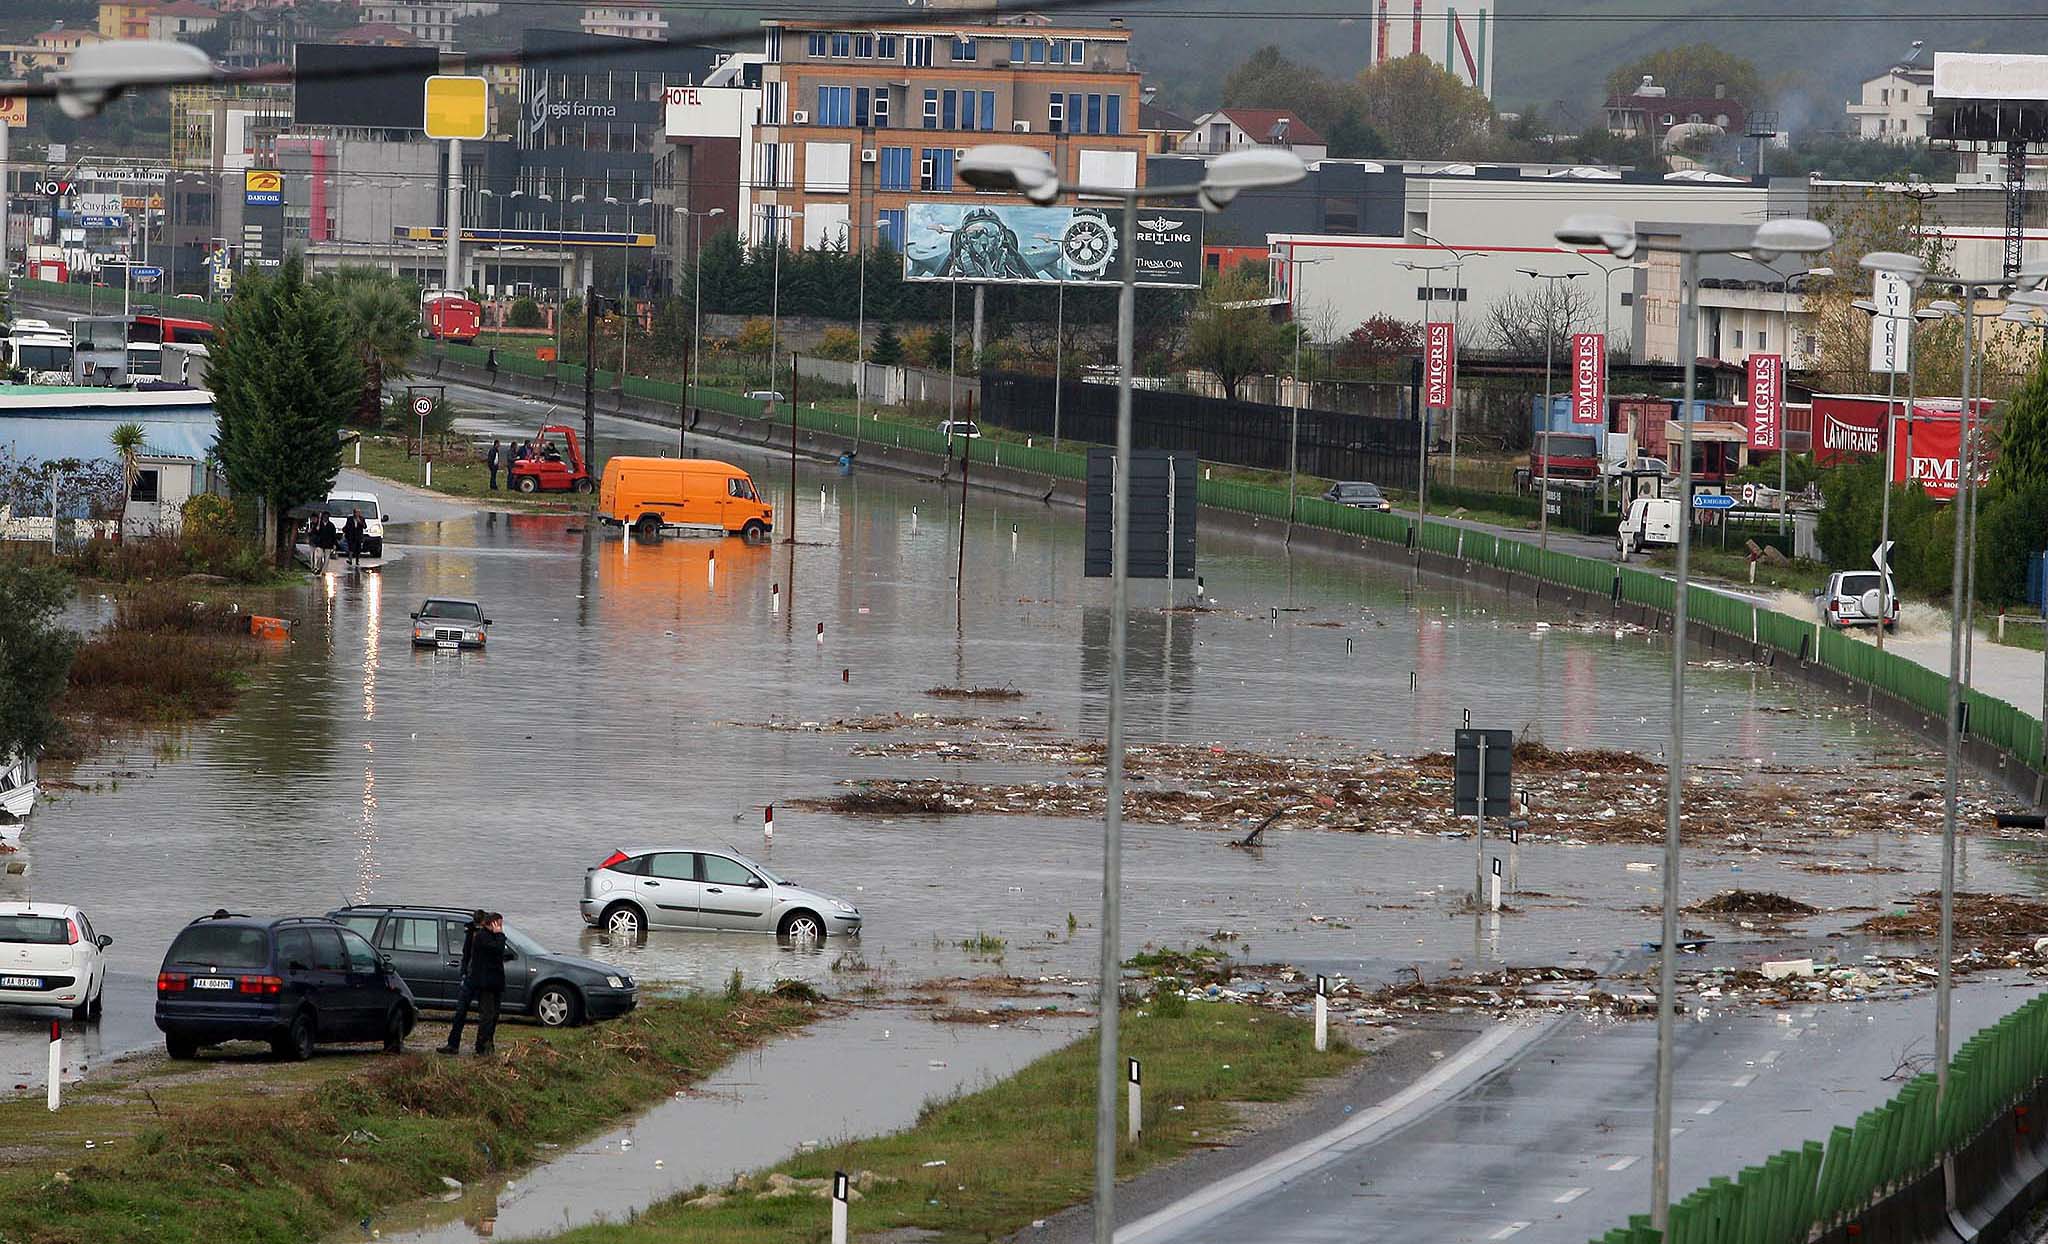 Autostrada e permbytur Durres-Tirane, ne zonen e Kasharit. Reshjet e shumta te shiut, kane bere qe te permbyten akse rrugore dhe zona te ndryshme te vendit. Deri tani raportohen 3 te vdekur si pasoje e motit te keq./r/n/r/nFlooded highway Durres-Tirana Durres-Tirana, near the Kashar area. Heavy rains have led to flooding at road axes and different areas of the country. Until now 3 deaths reported as a result of bad weather.